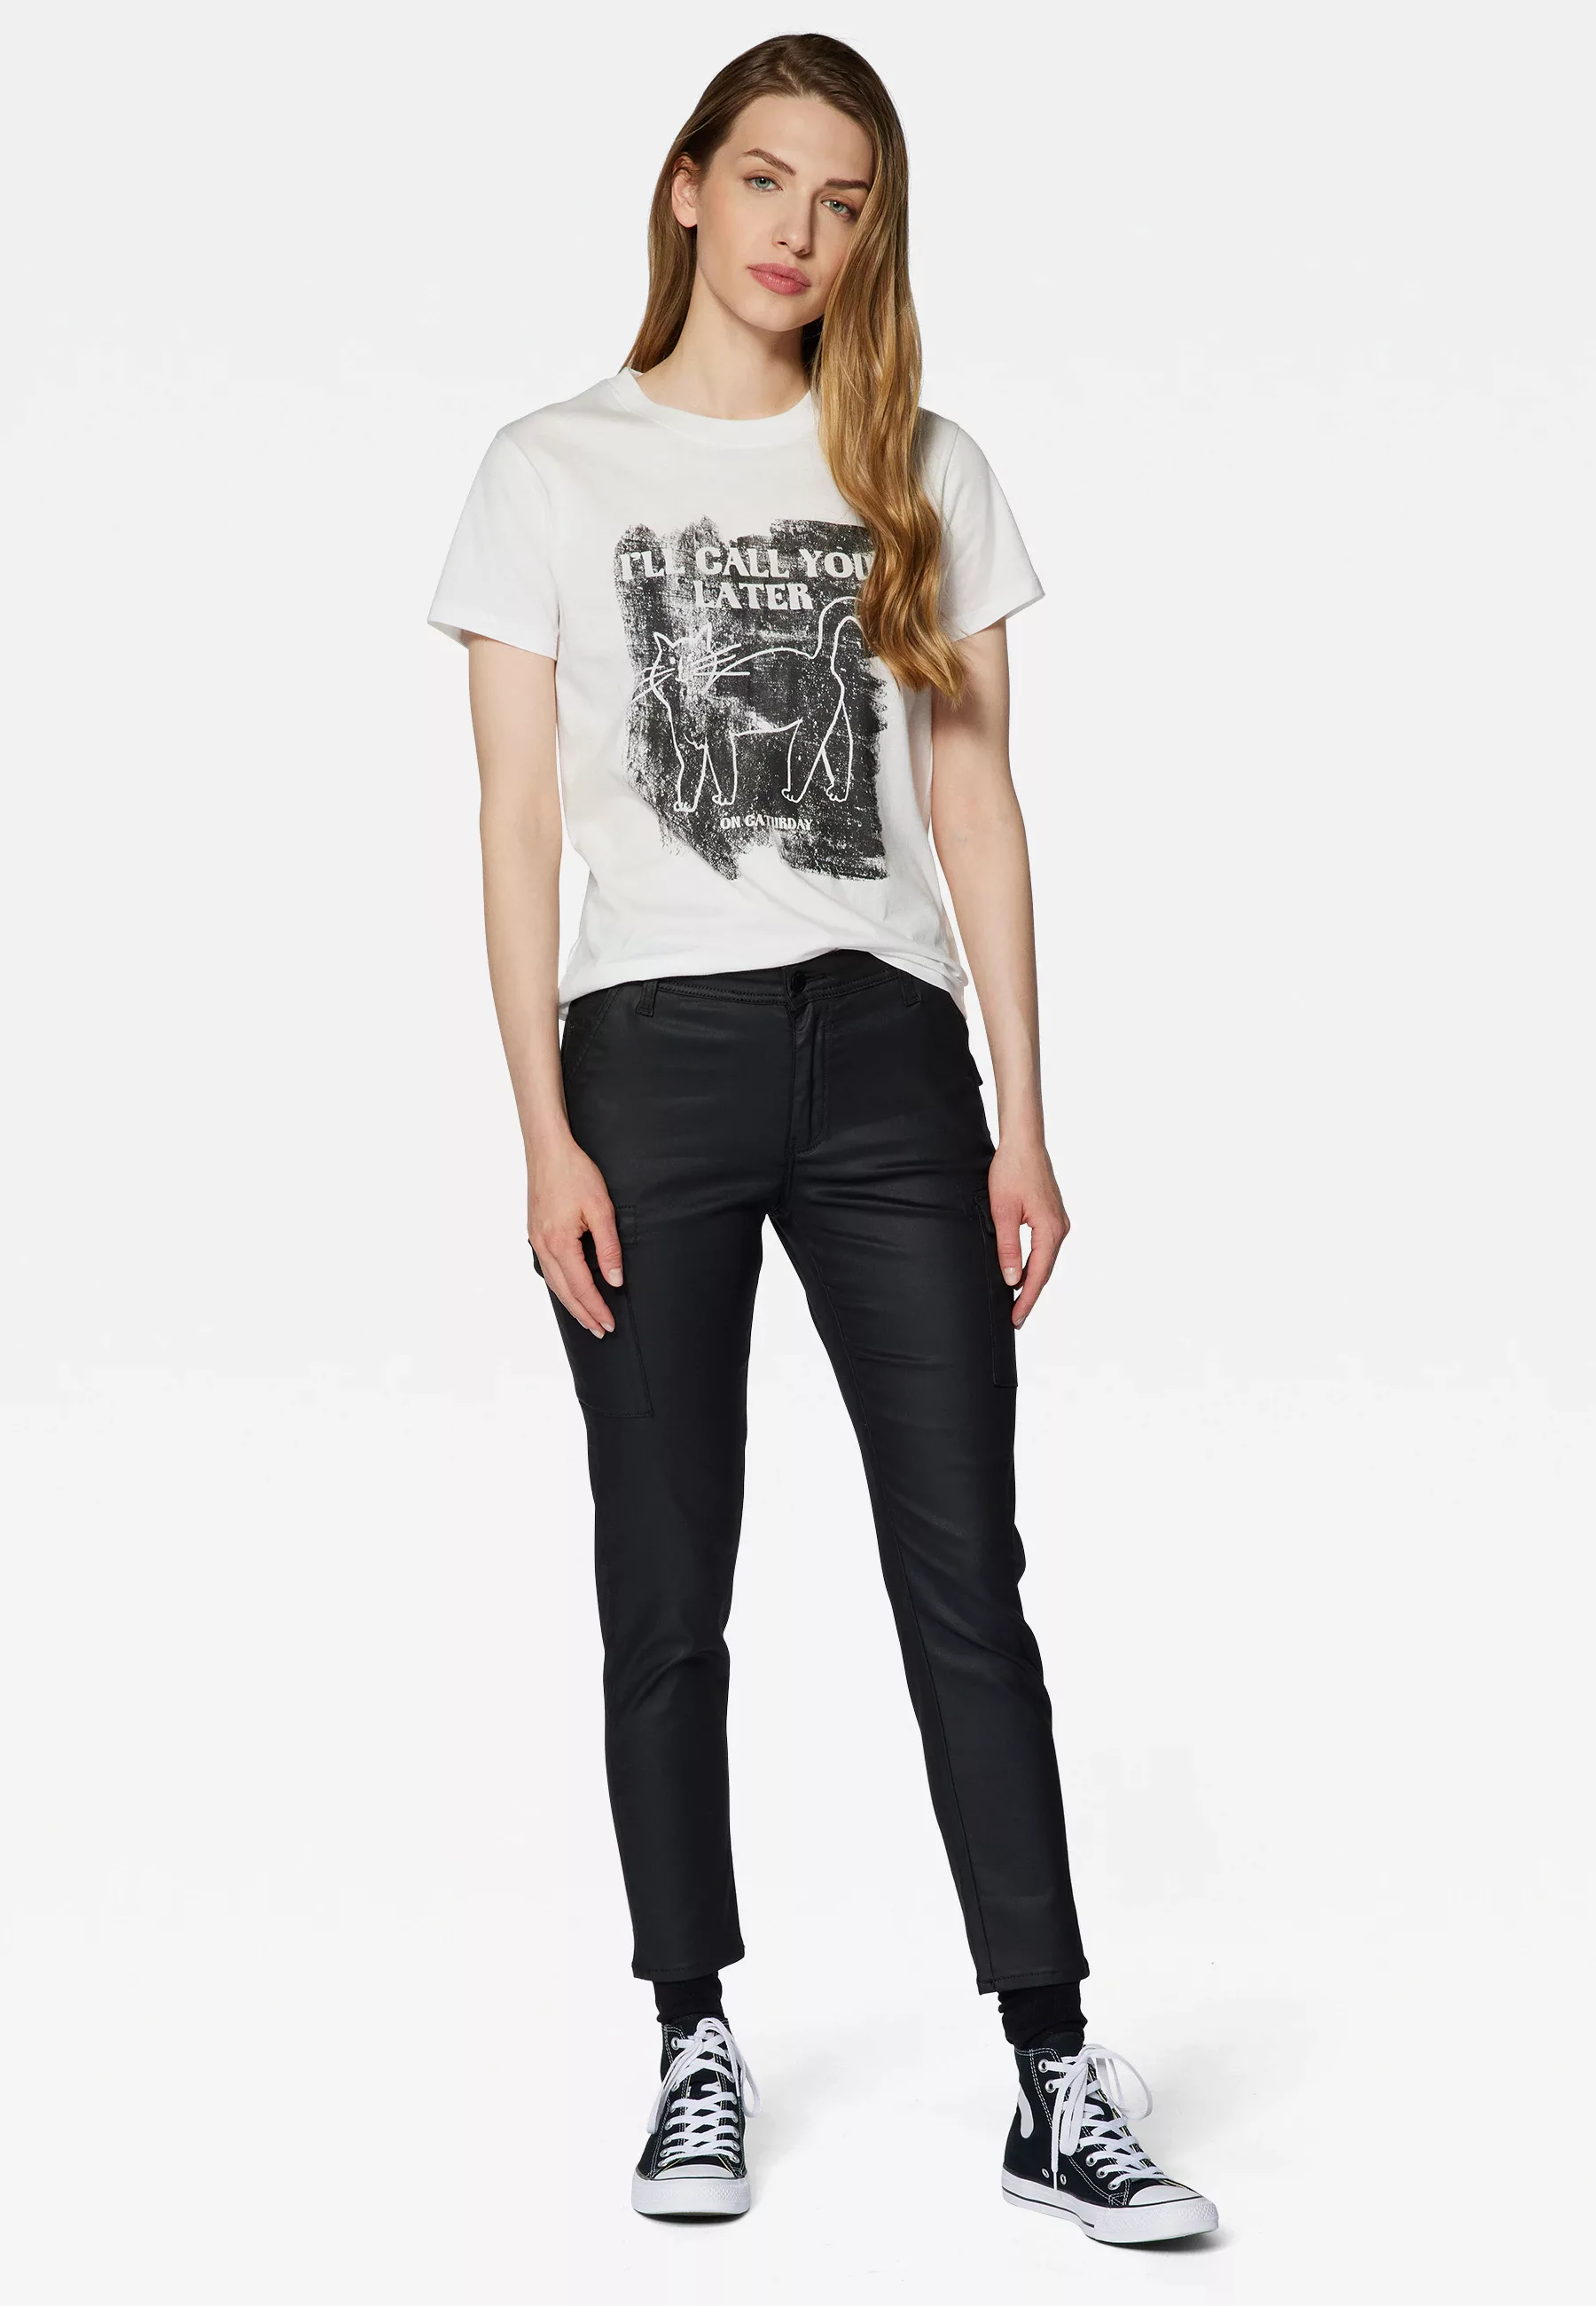 Mavi Rundhalsshirt "ILL CALL YOU LATER PRINTED GR", Print T-Shirt günstig online kaufen